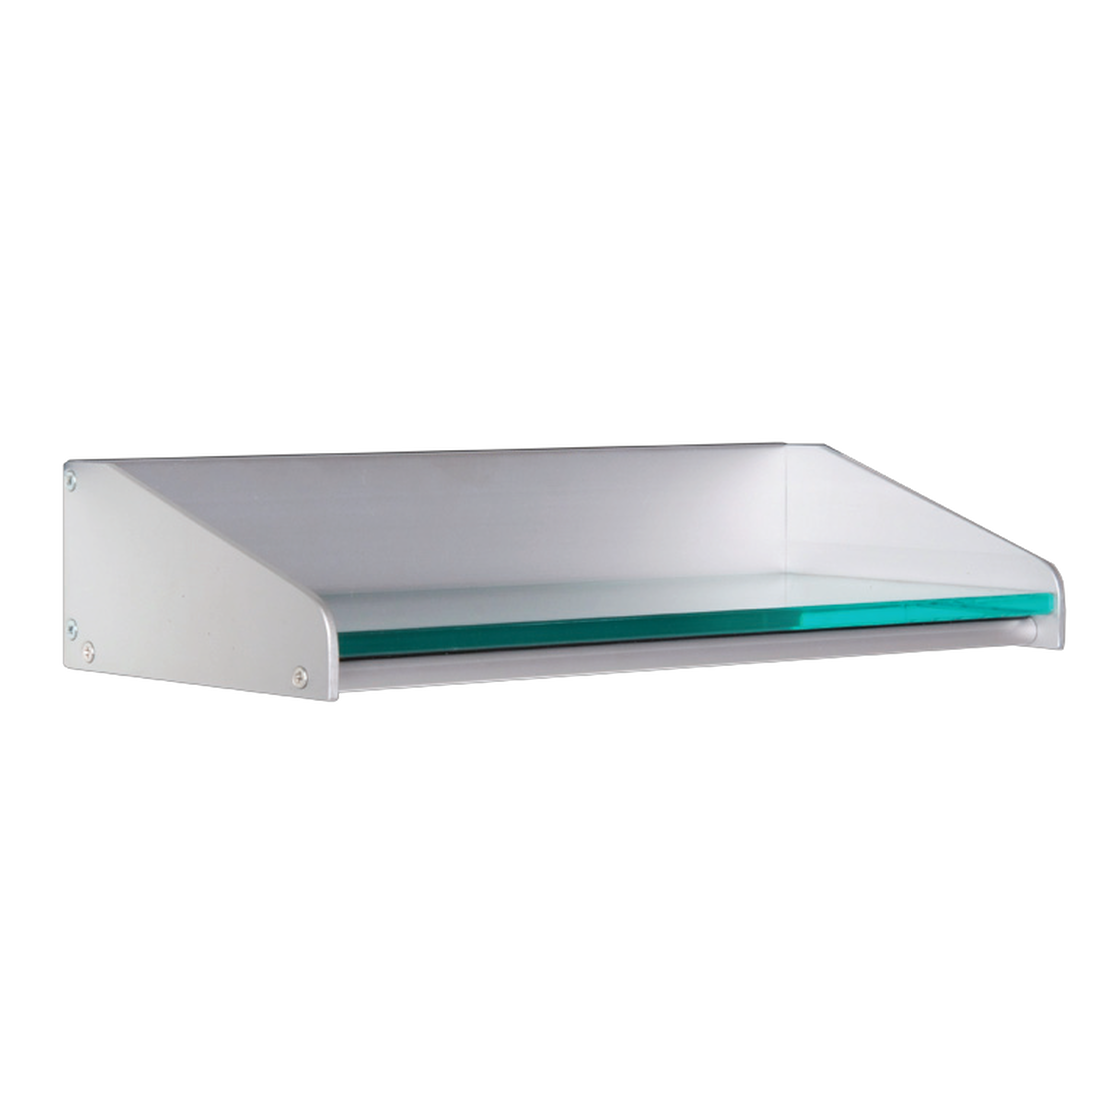 Aluminium shelf with glass plate, 240mm